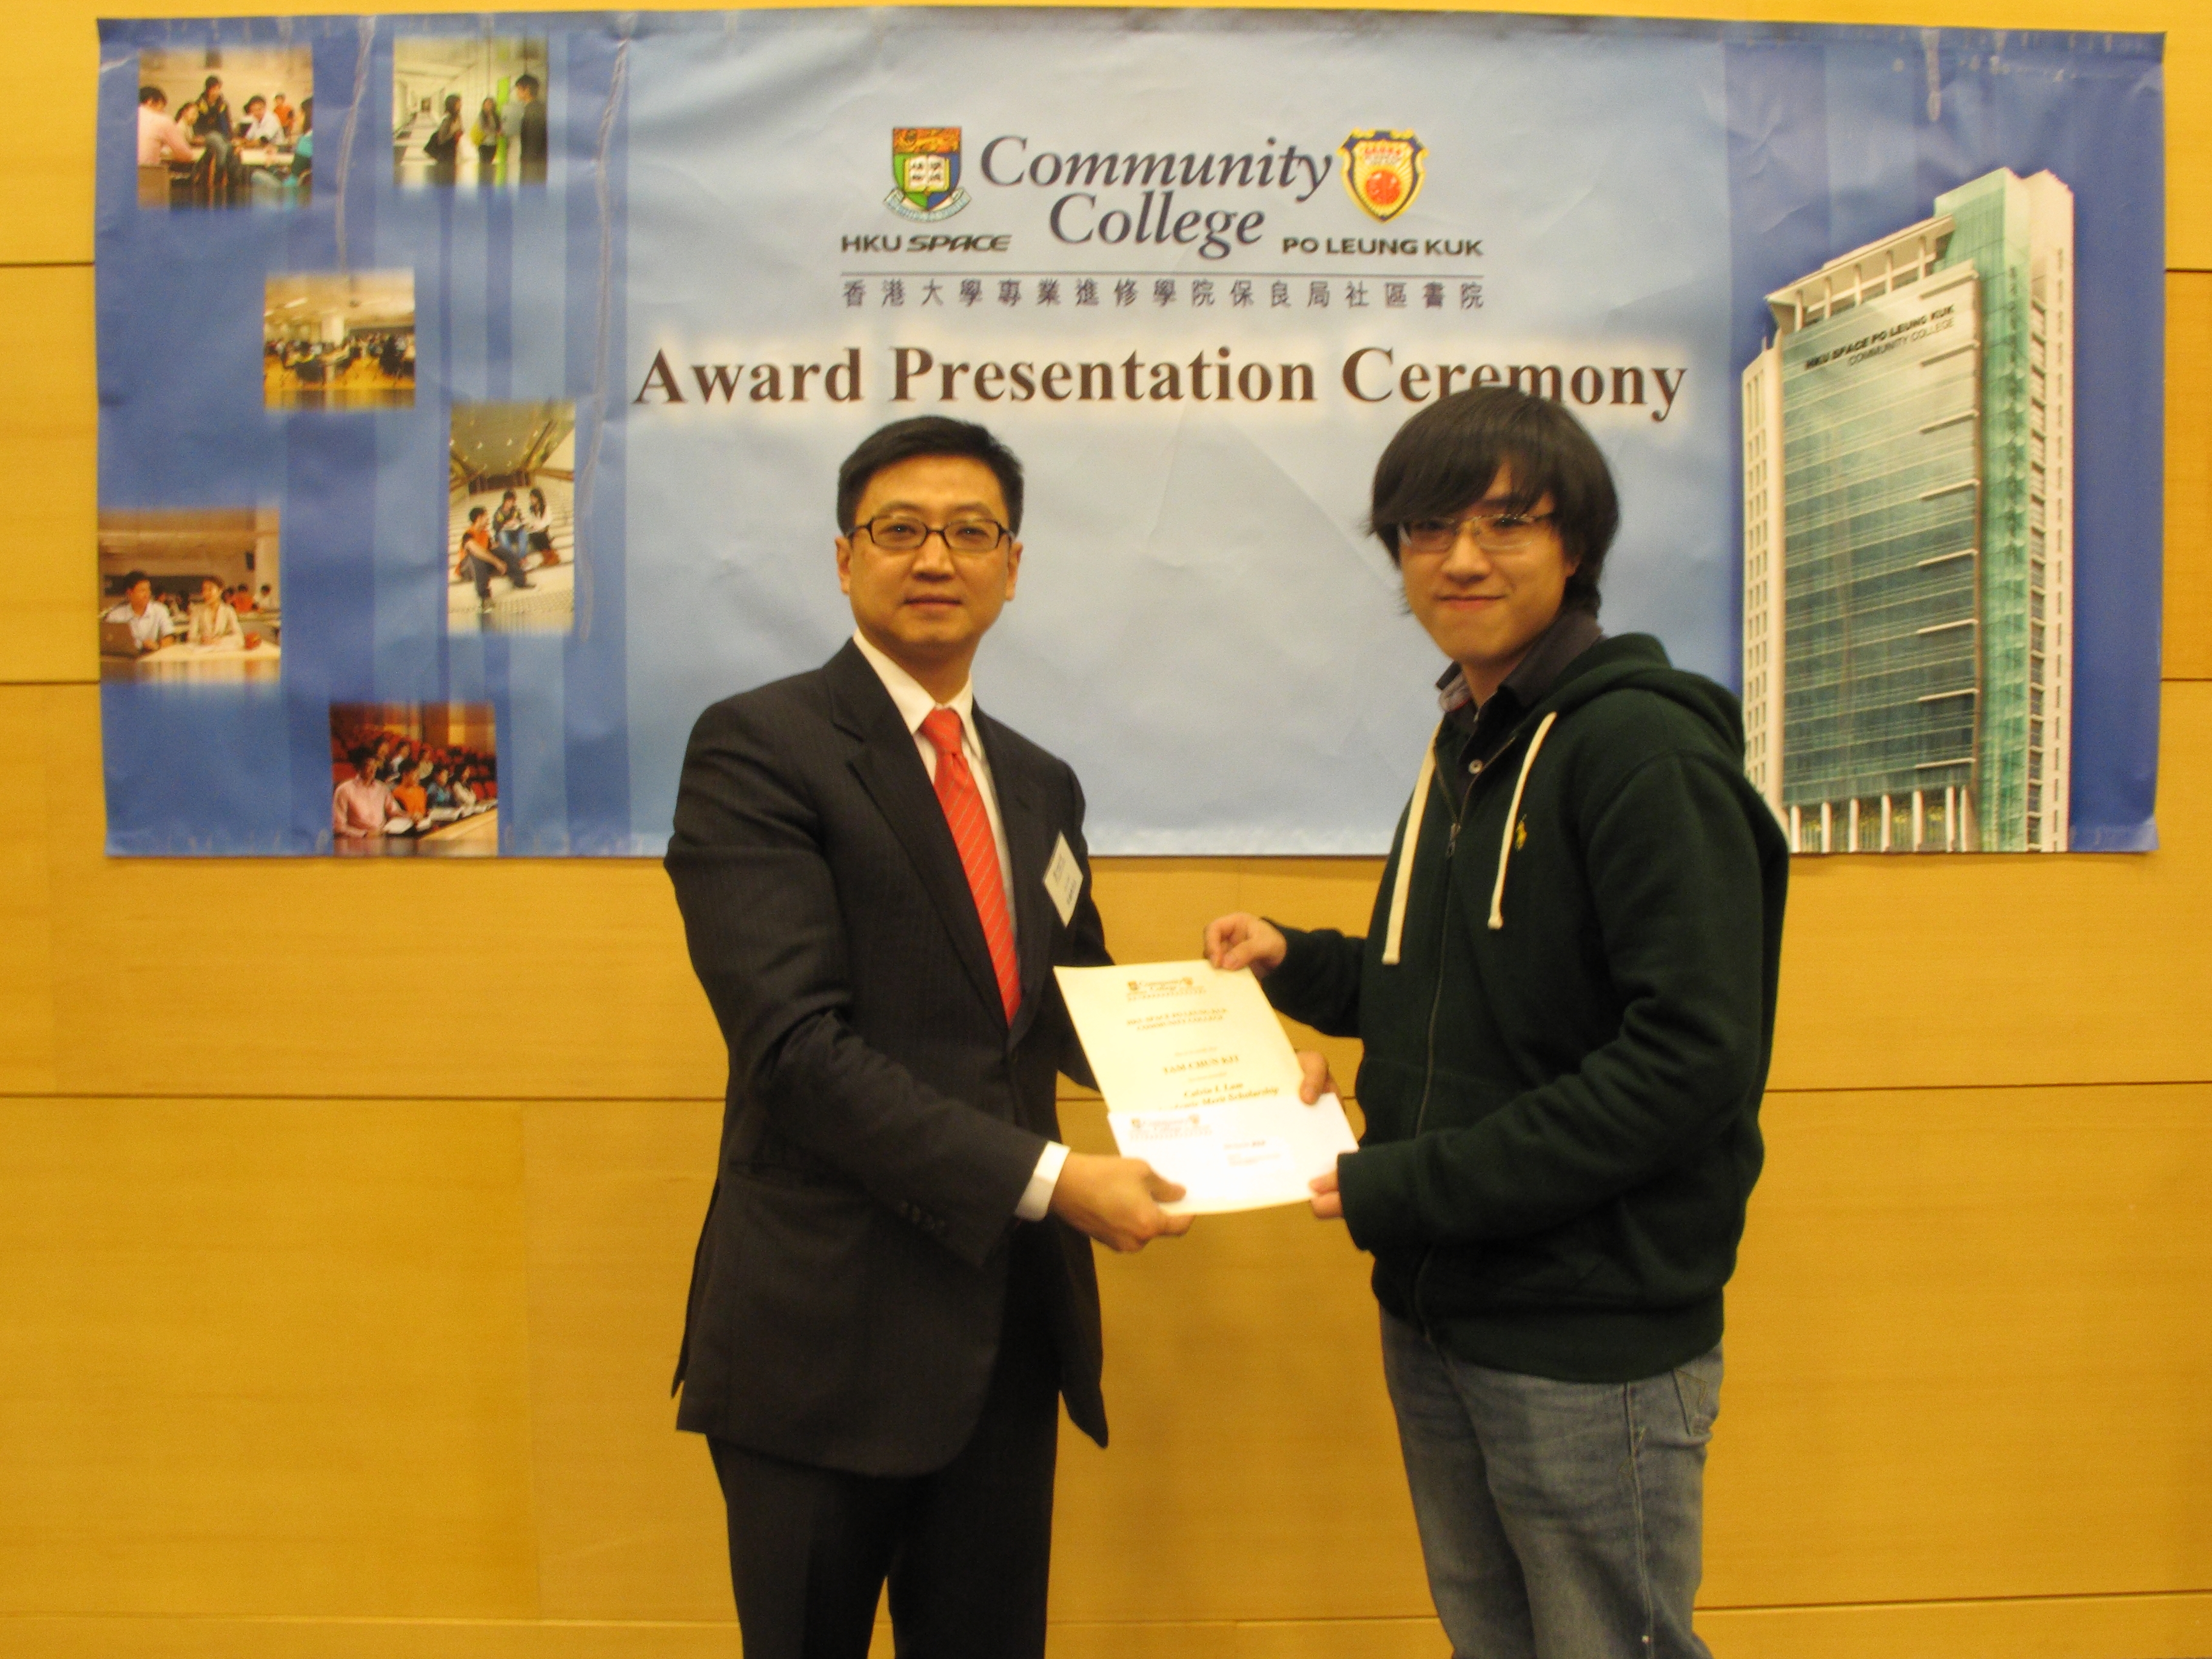 Award Presentation Ceremony 2011 - Photo - 19